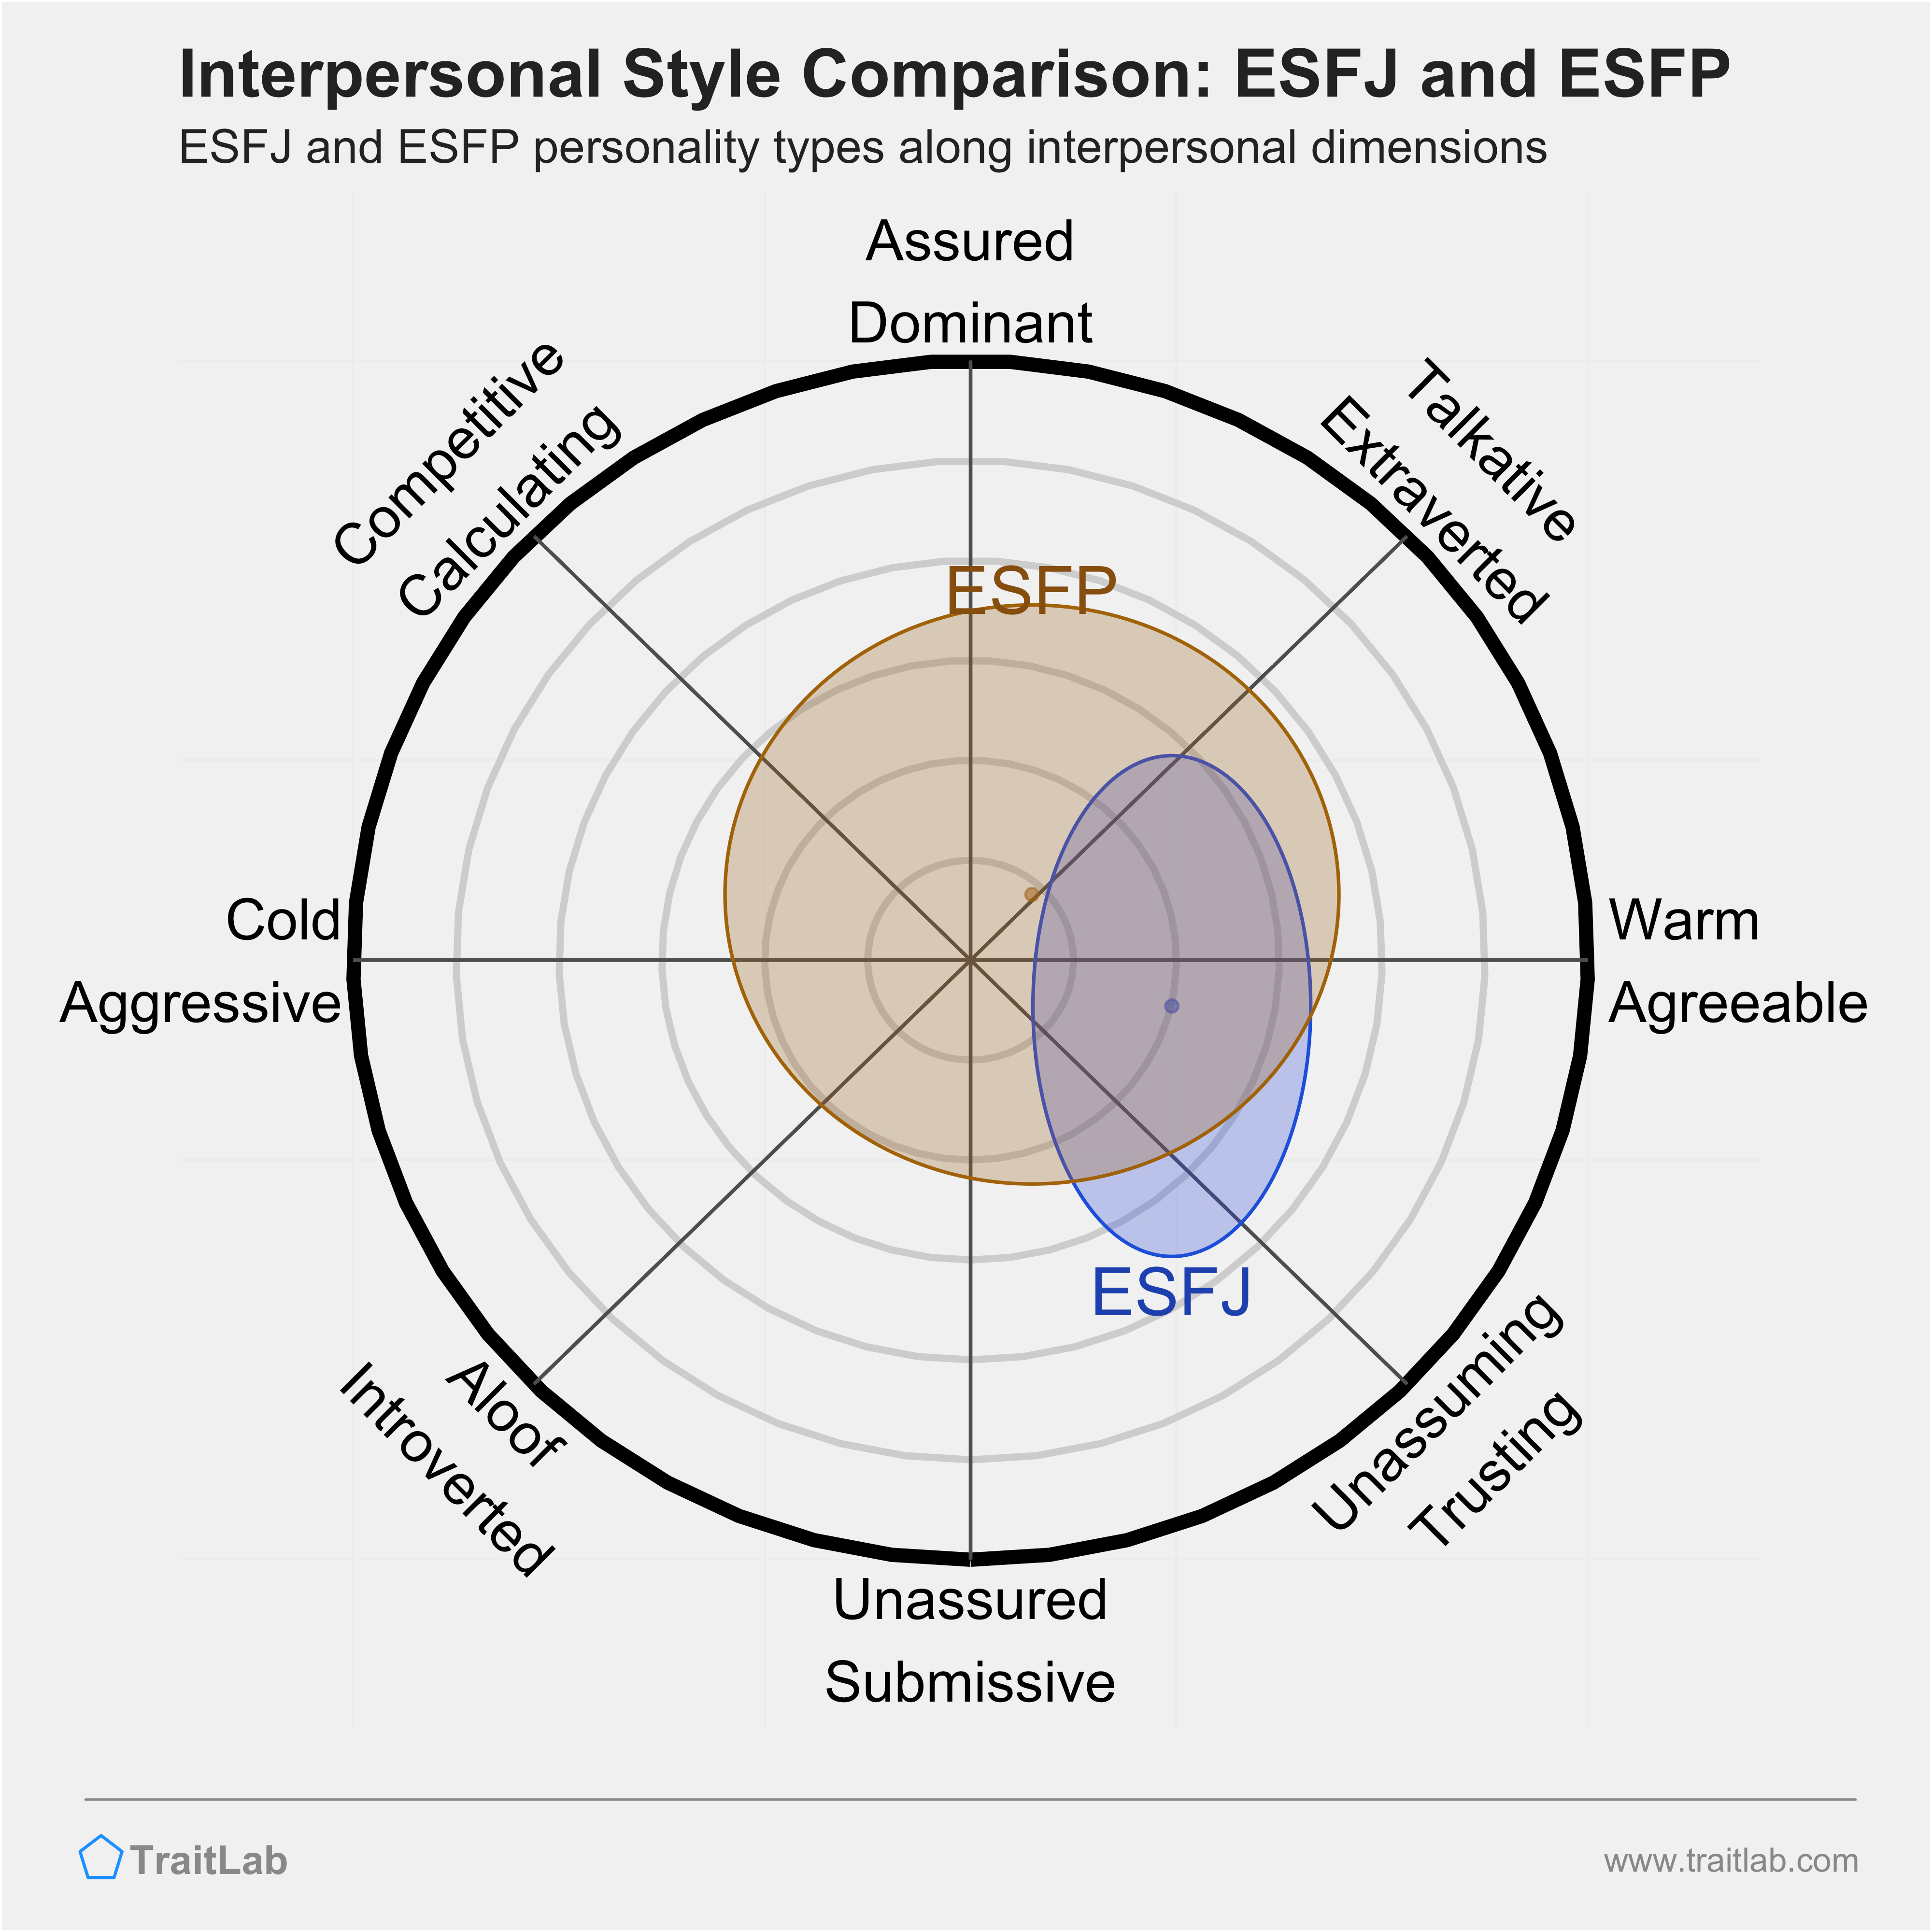 ESFJ and ESFP comparison across interpersonal dimensions